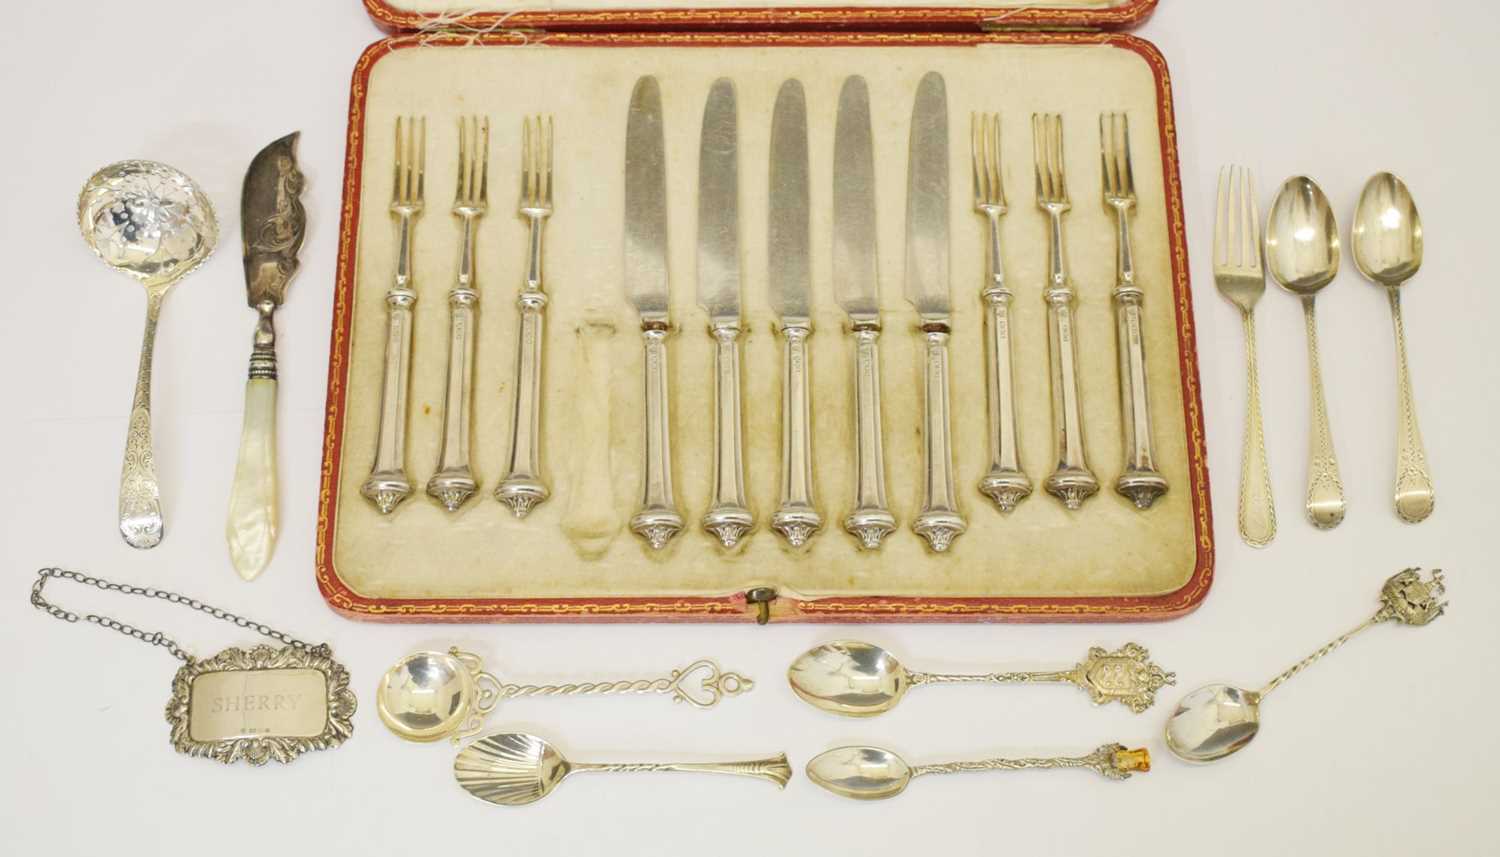 Victorian silver butter dish, cased set of George V silver handled fruit knives and forks, etc